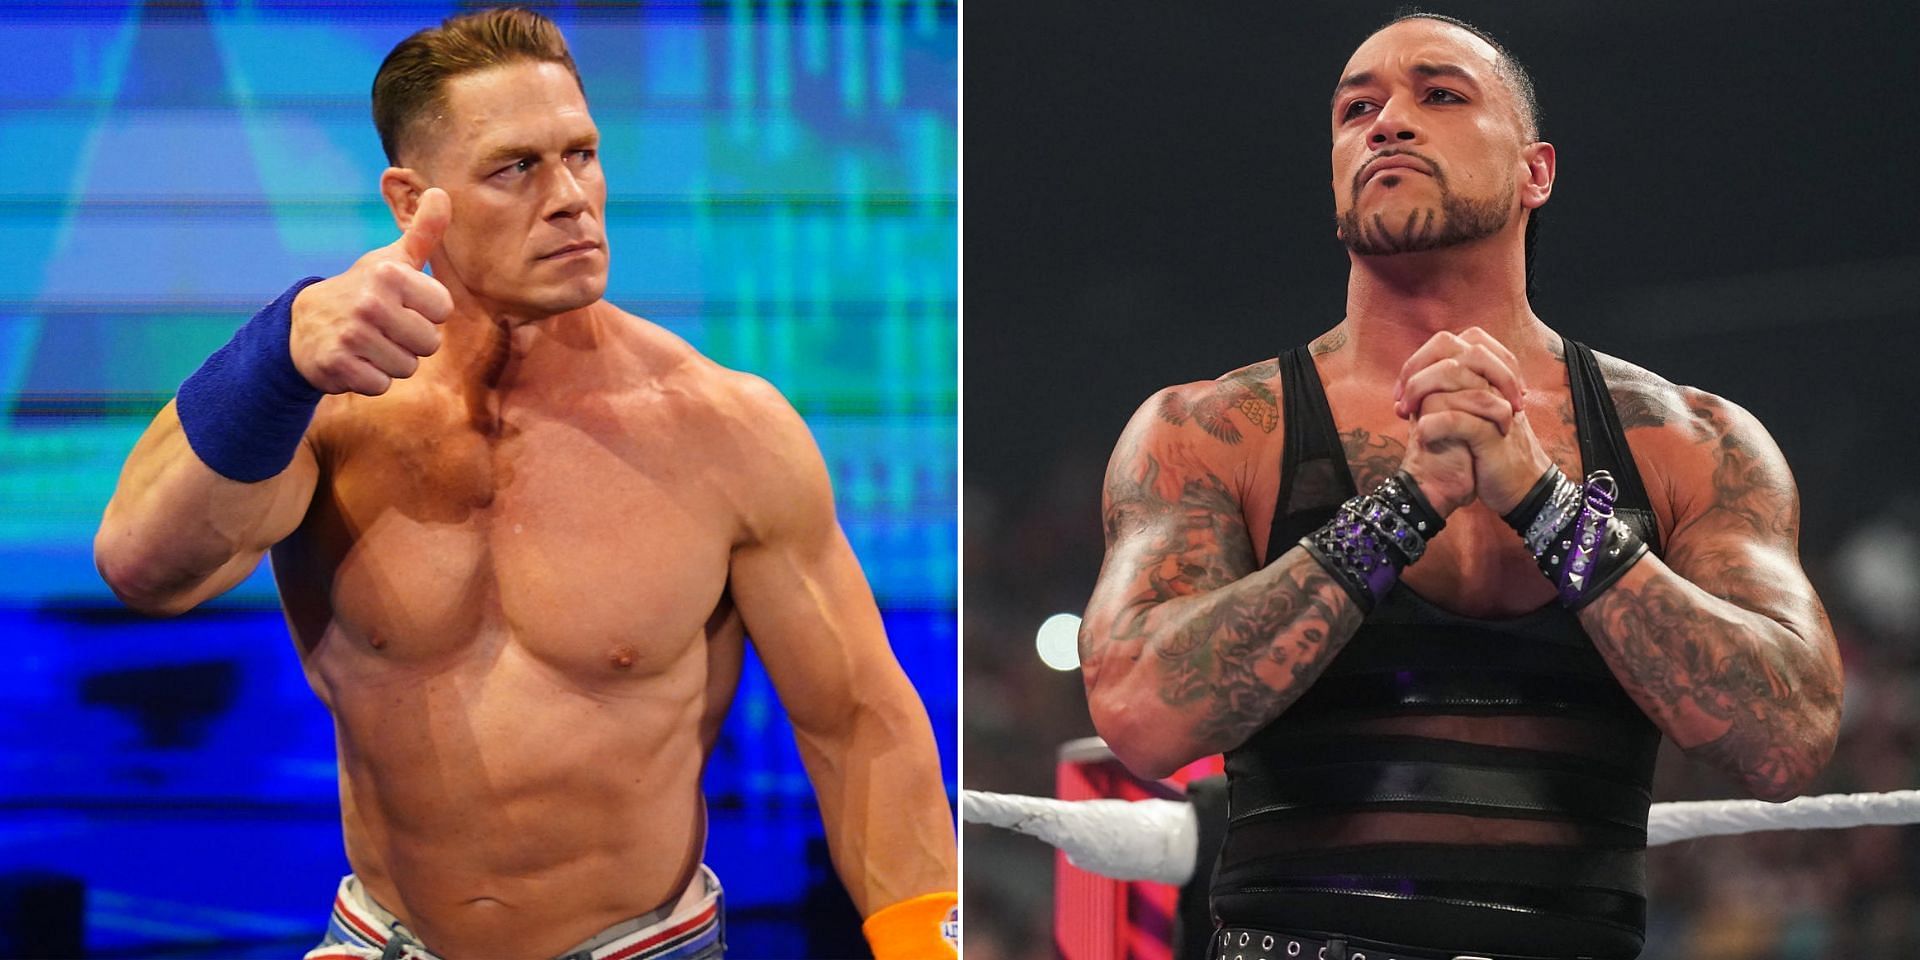 A WWE star paid tribute to John Cena on RAW